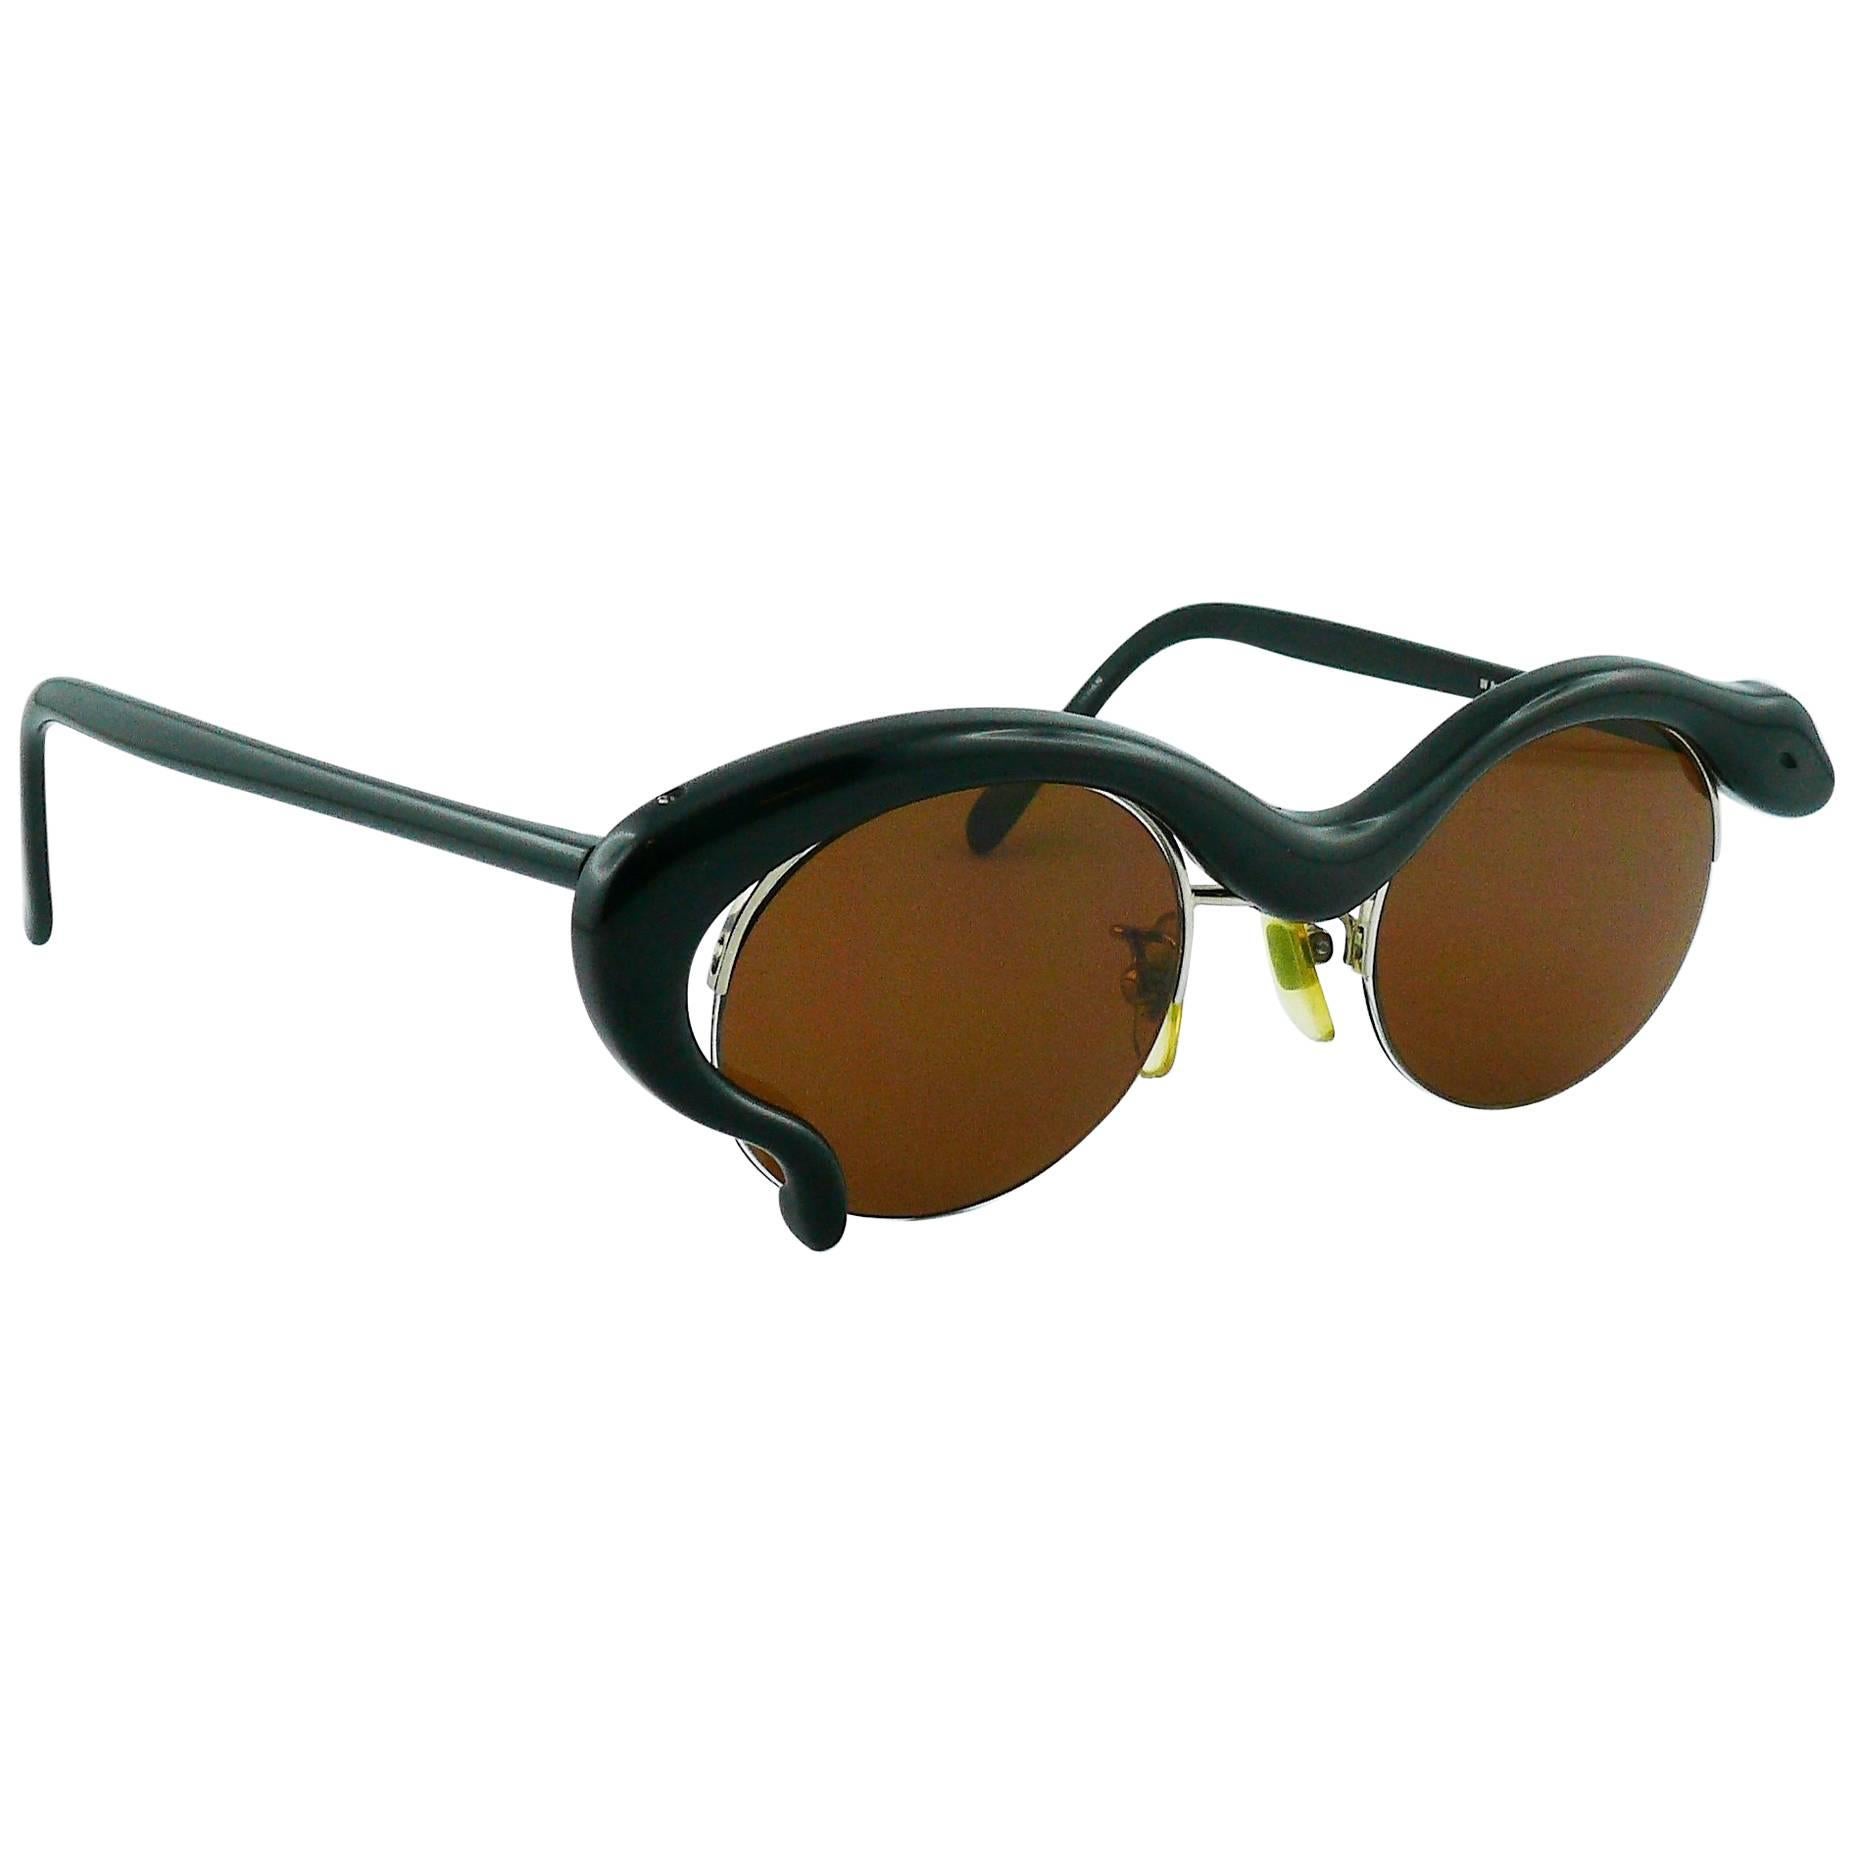 Yohji Yamamoto Vintage Snake Sunglasses Model 52-5001